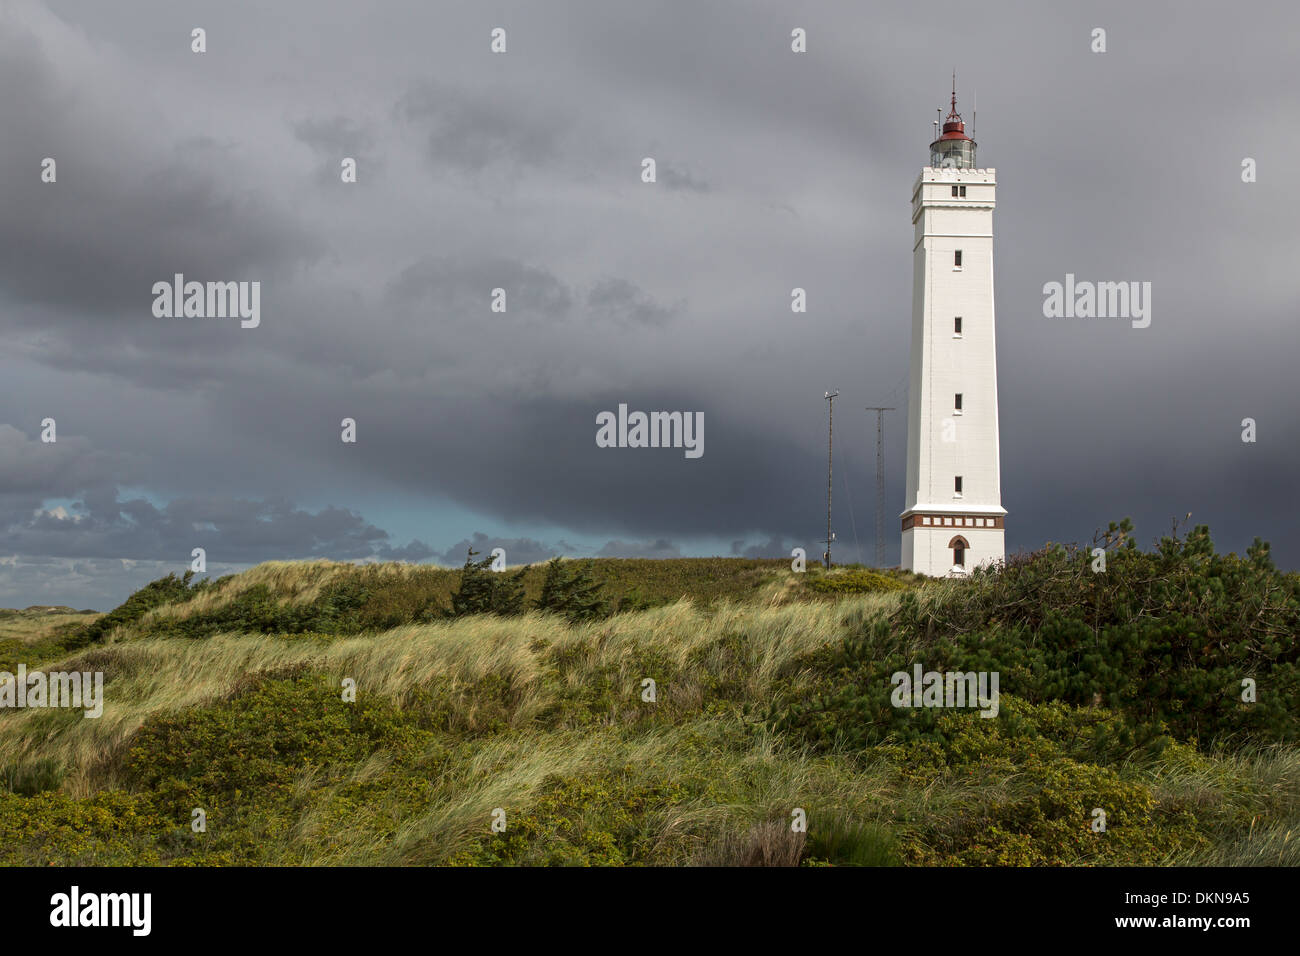 Lighthouse Blavand, Denmark, Europe Stock Photo